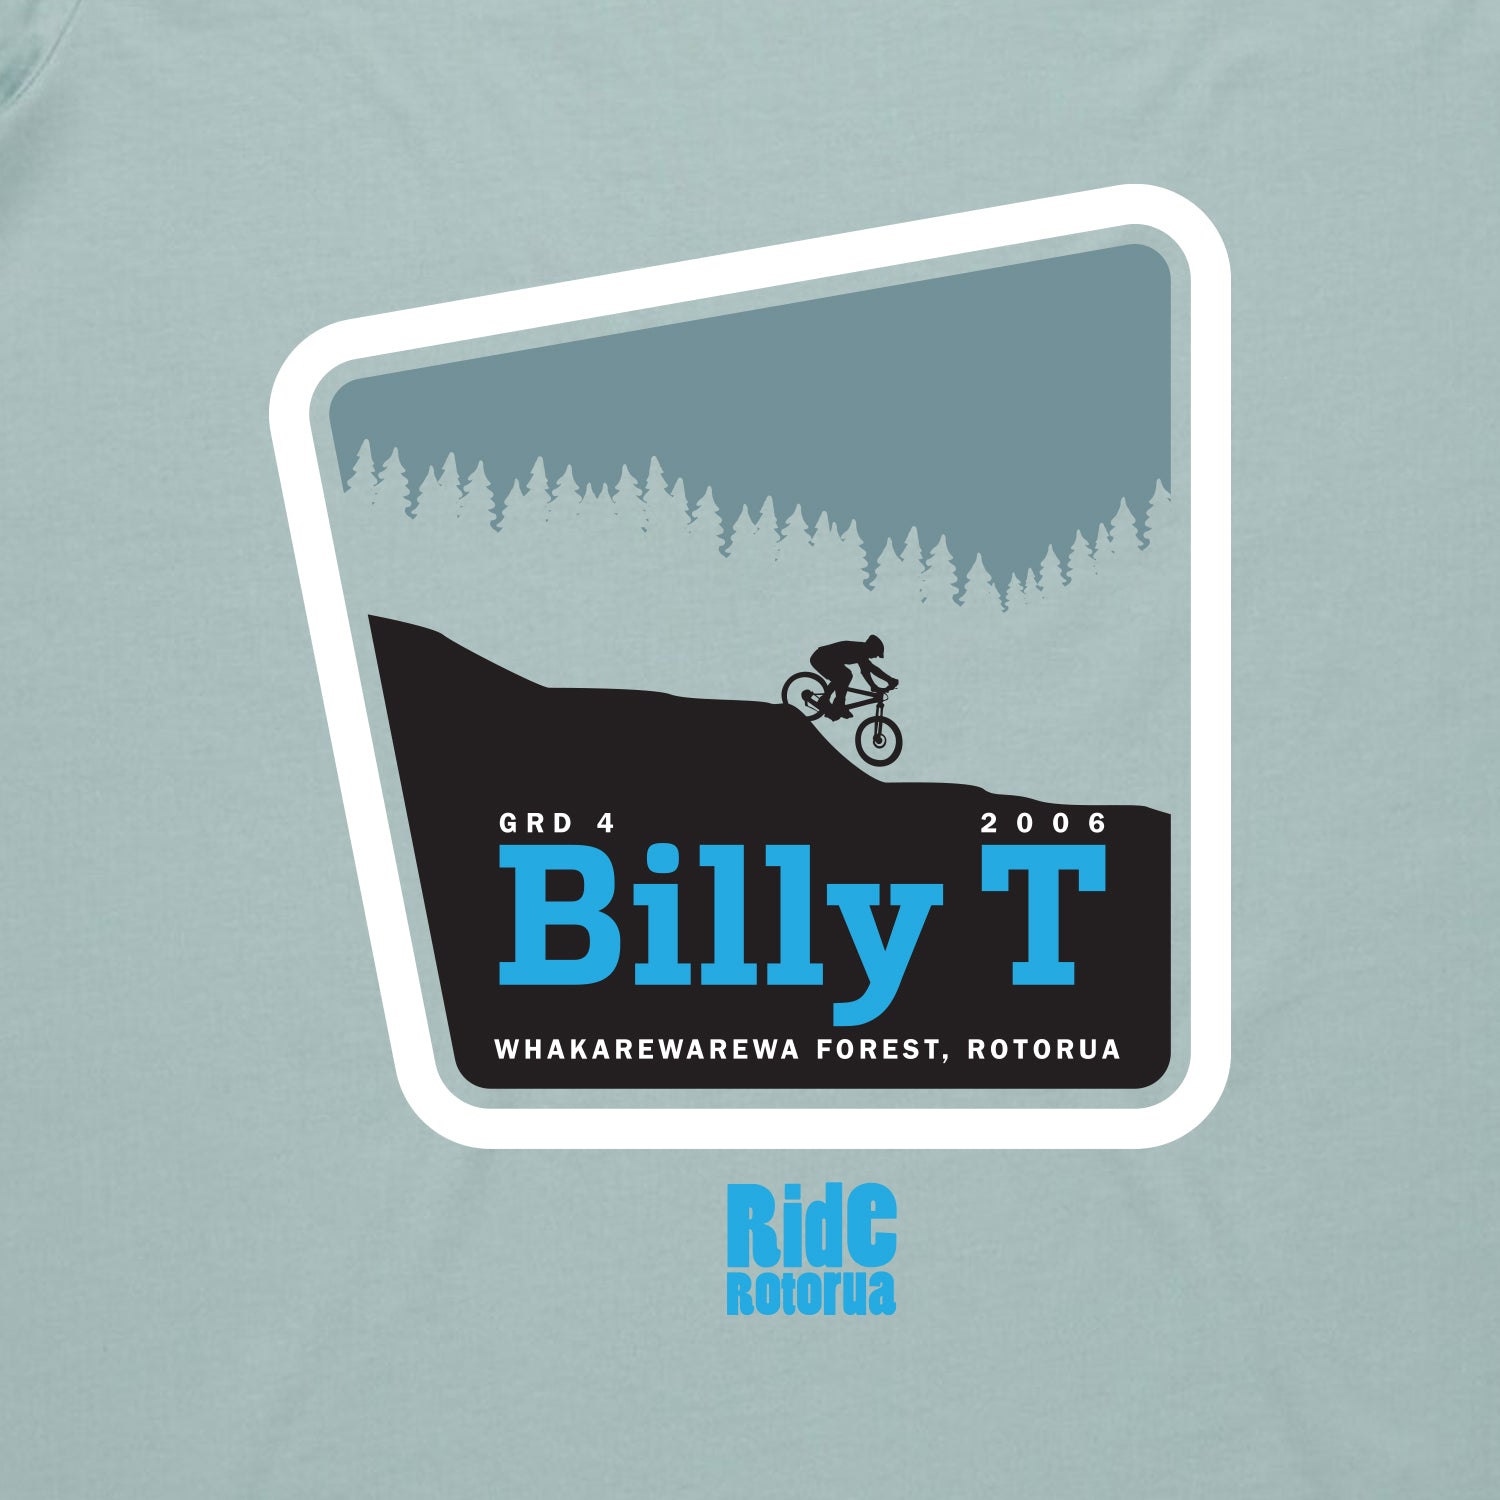 Nzo Billy T Womens T-Shirt